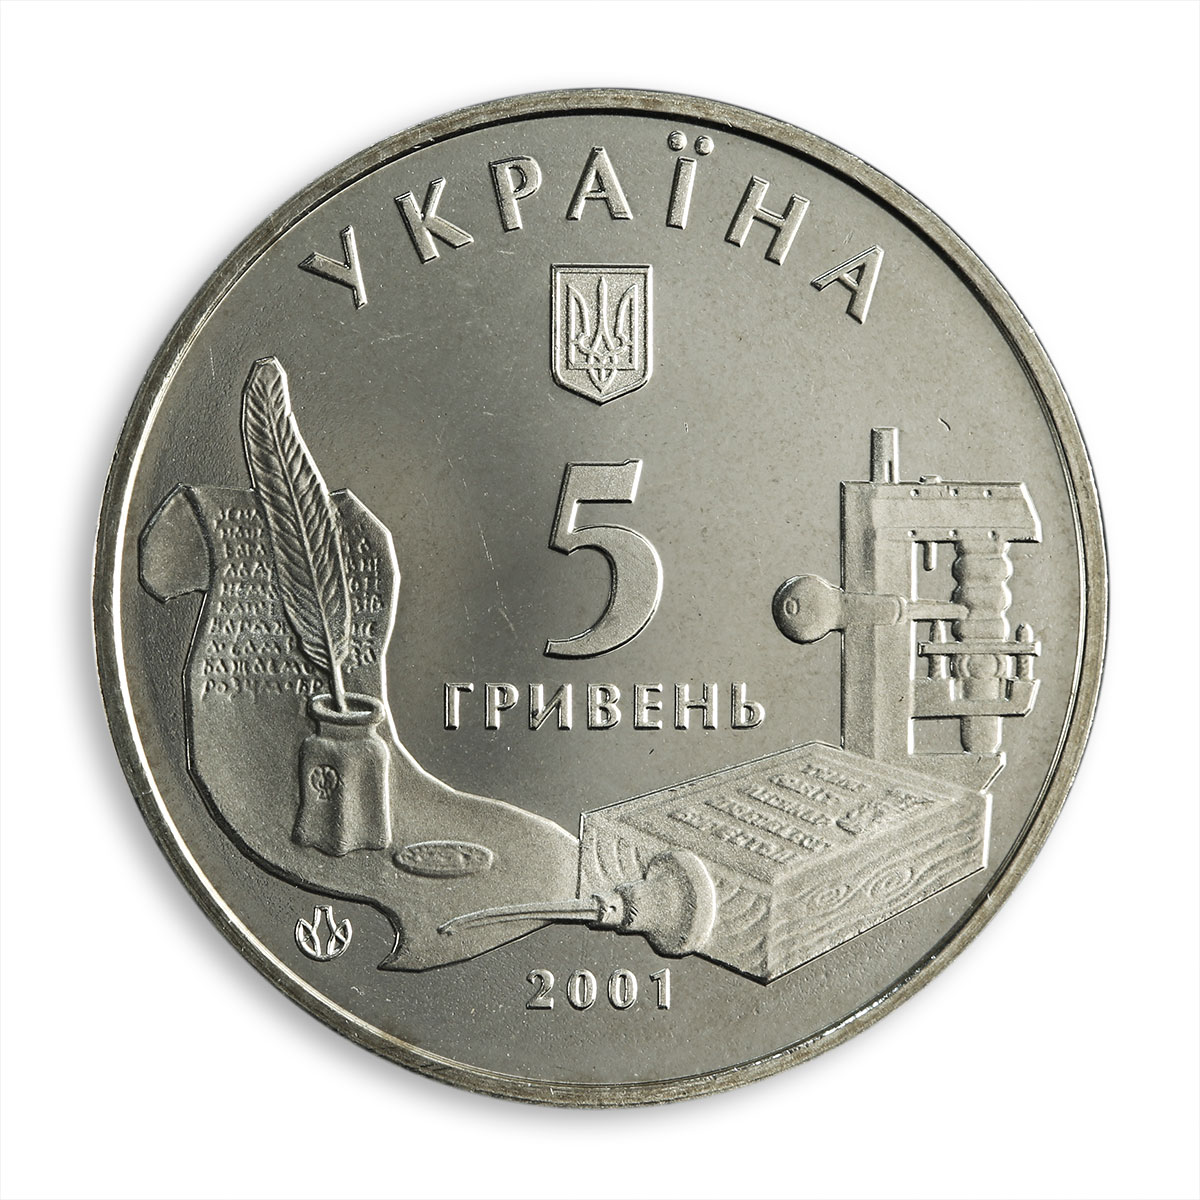 Ukraine 5 hryvnia Ostroh Academy higher education institution nickel coin 2001